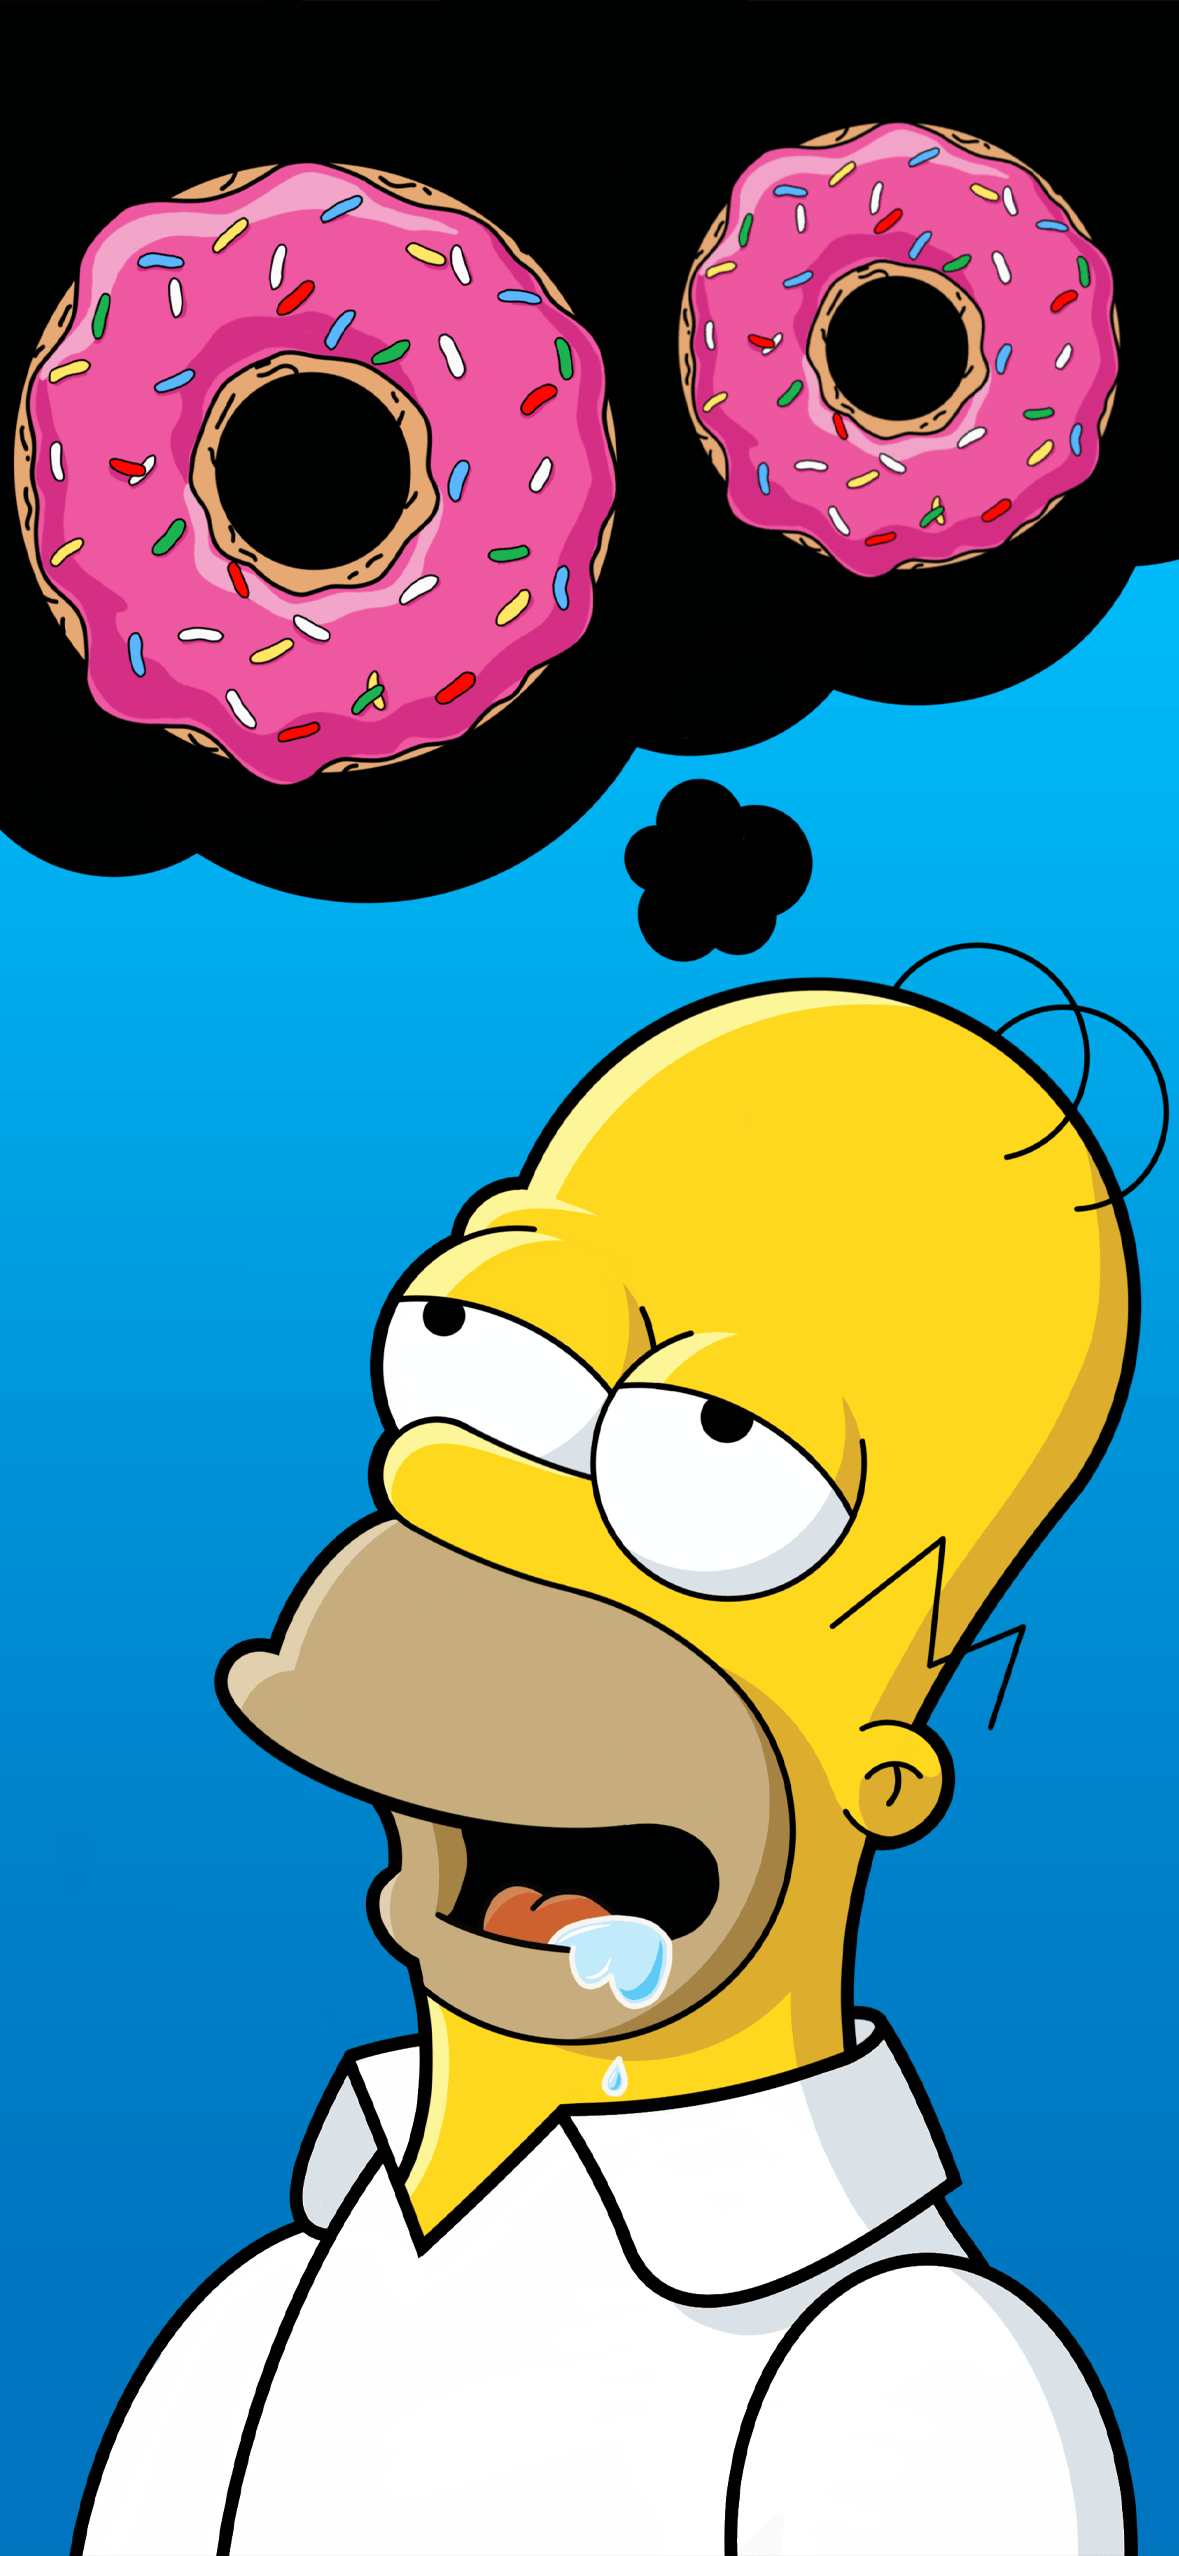 Homer Simpson Wallpaper, HD Homer Simpson Background, Free Image Download